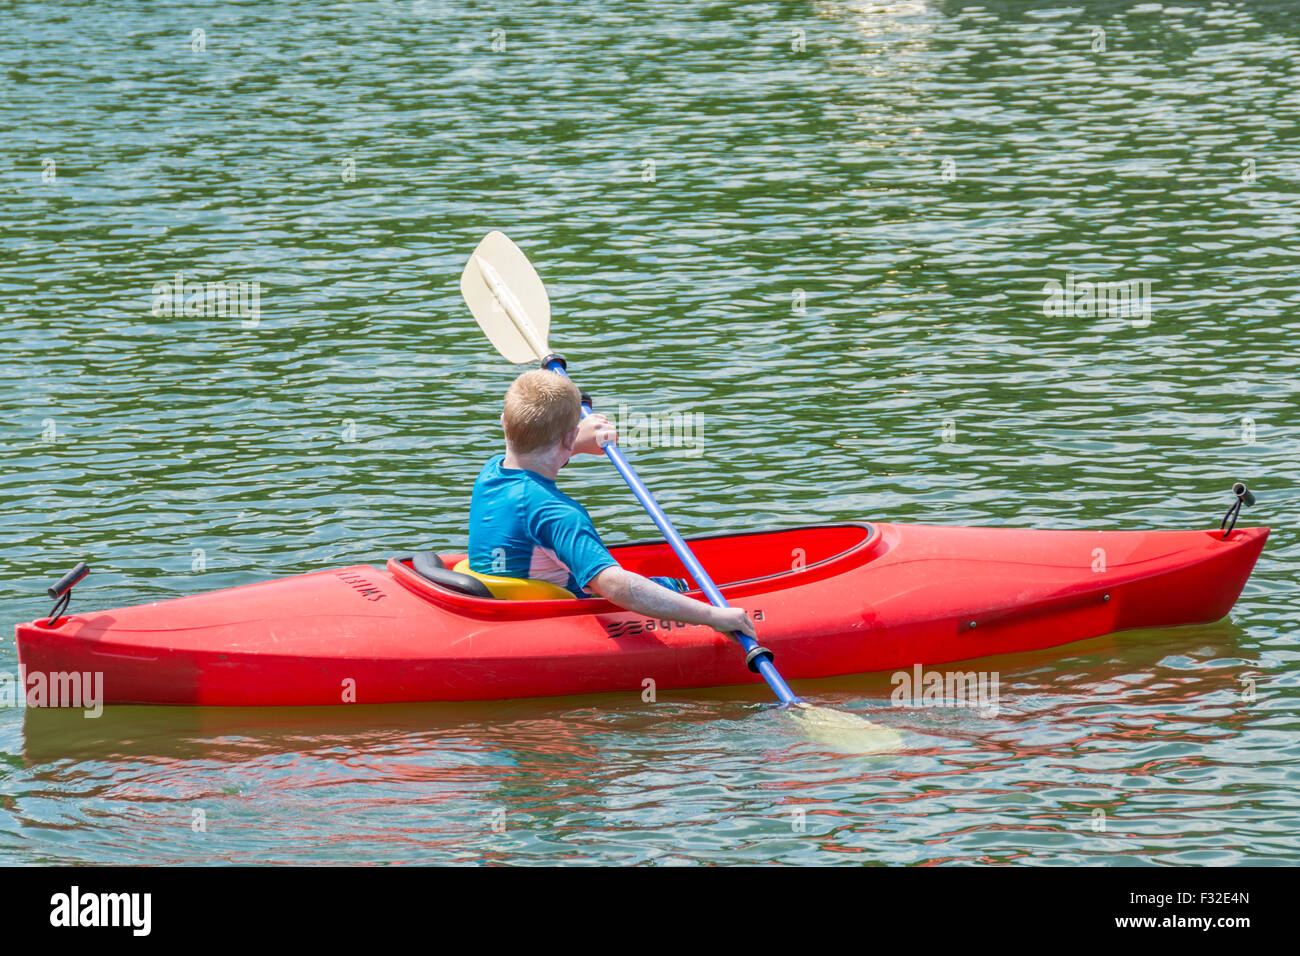 Young boy kayaking on a lake Stock Photo